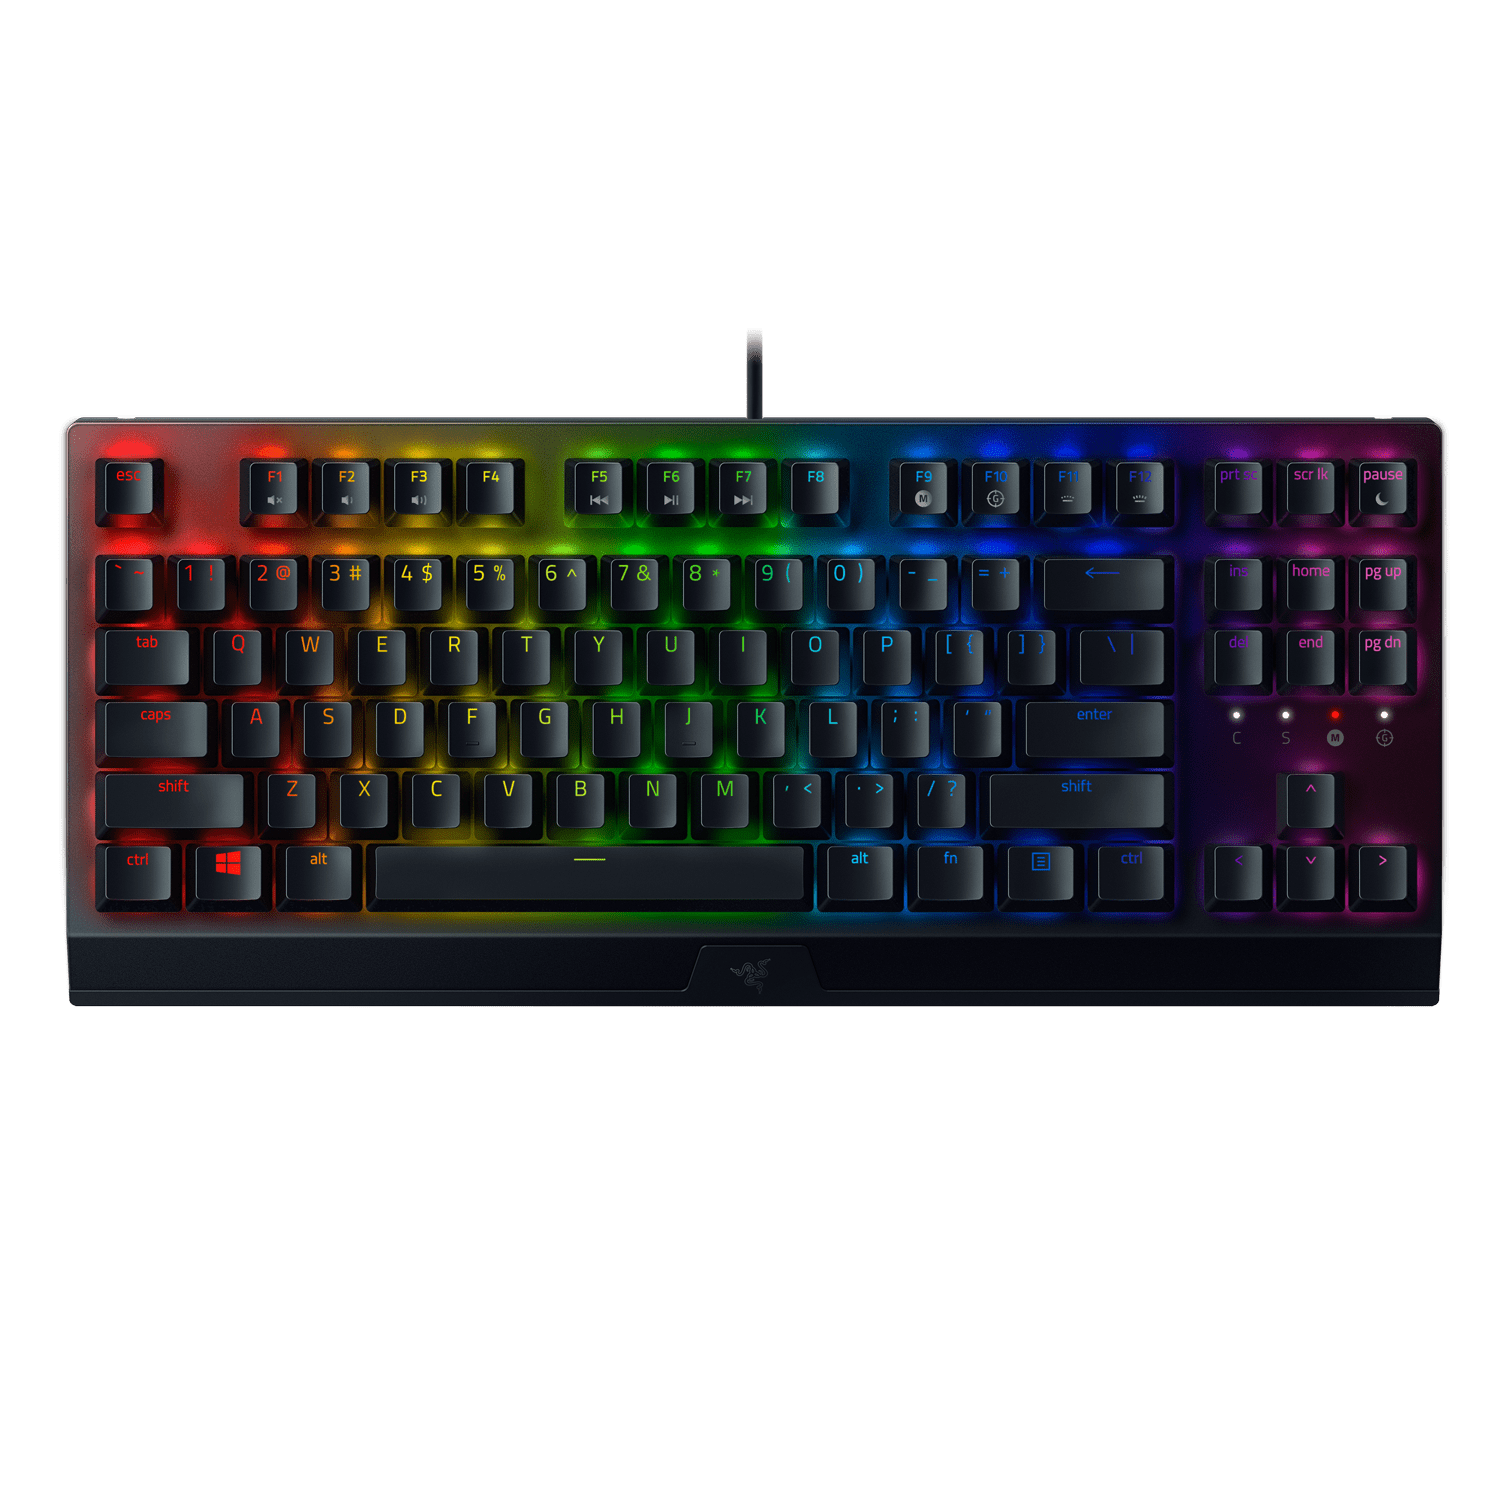 Razer BlackWidow V3 Tenkeyless Wired Mechanical Gaming Keyboard for PC with  RGB Chroma, Green Switches, Black